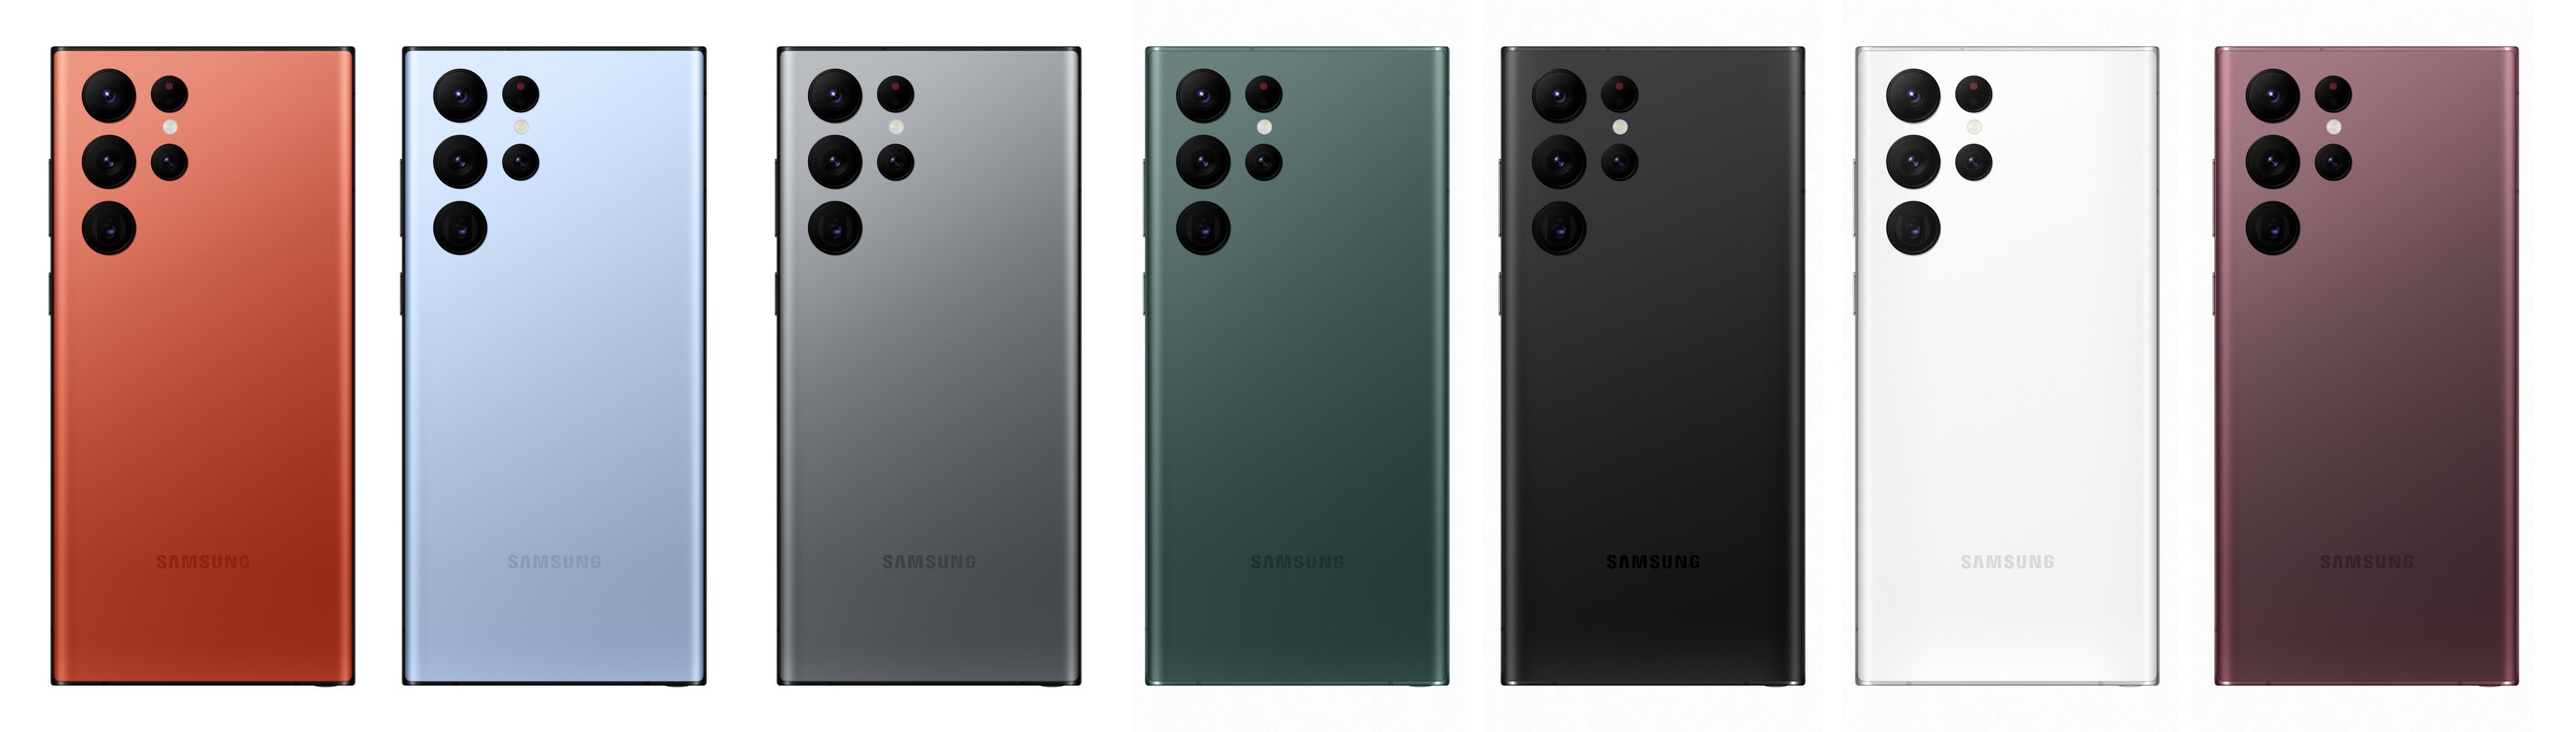 Samsung galaxy s22 specs